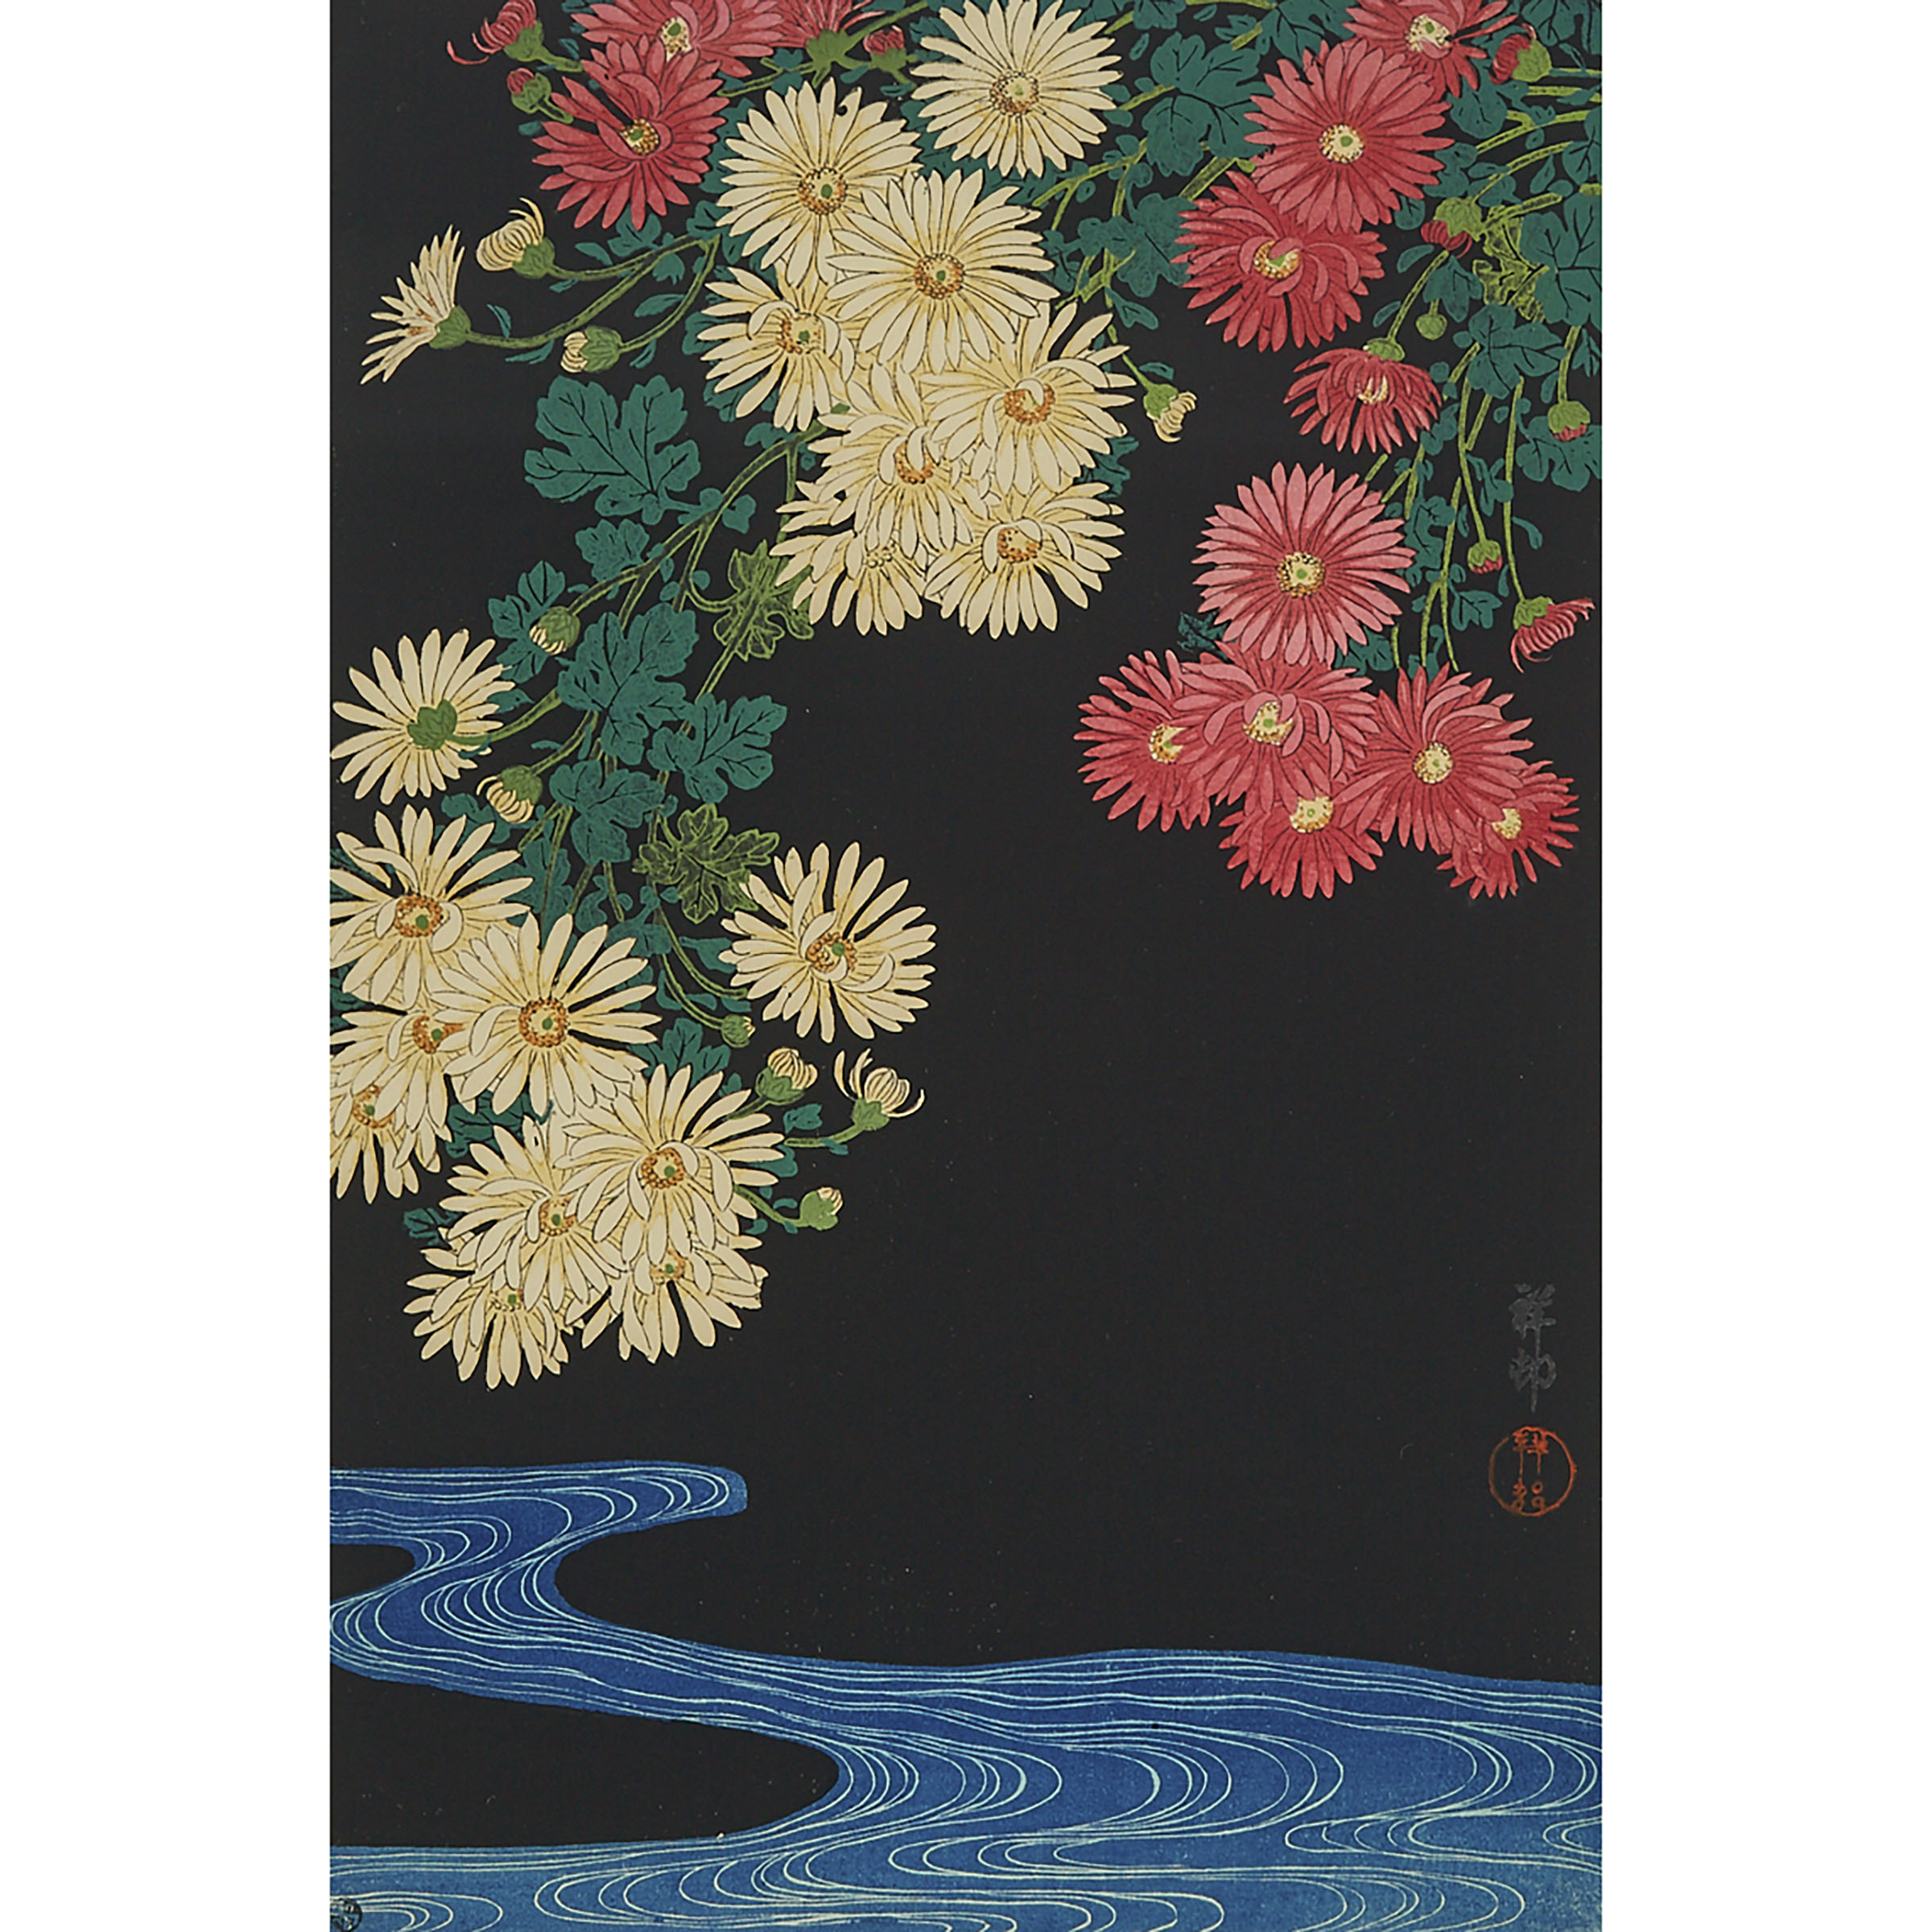 Ohara Koson (1877-1945), Chrysanthemums and Running Water, Mid 20th Century